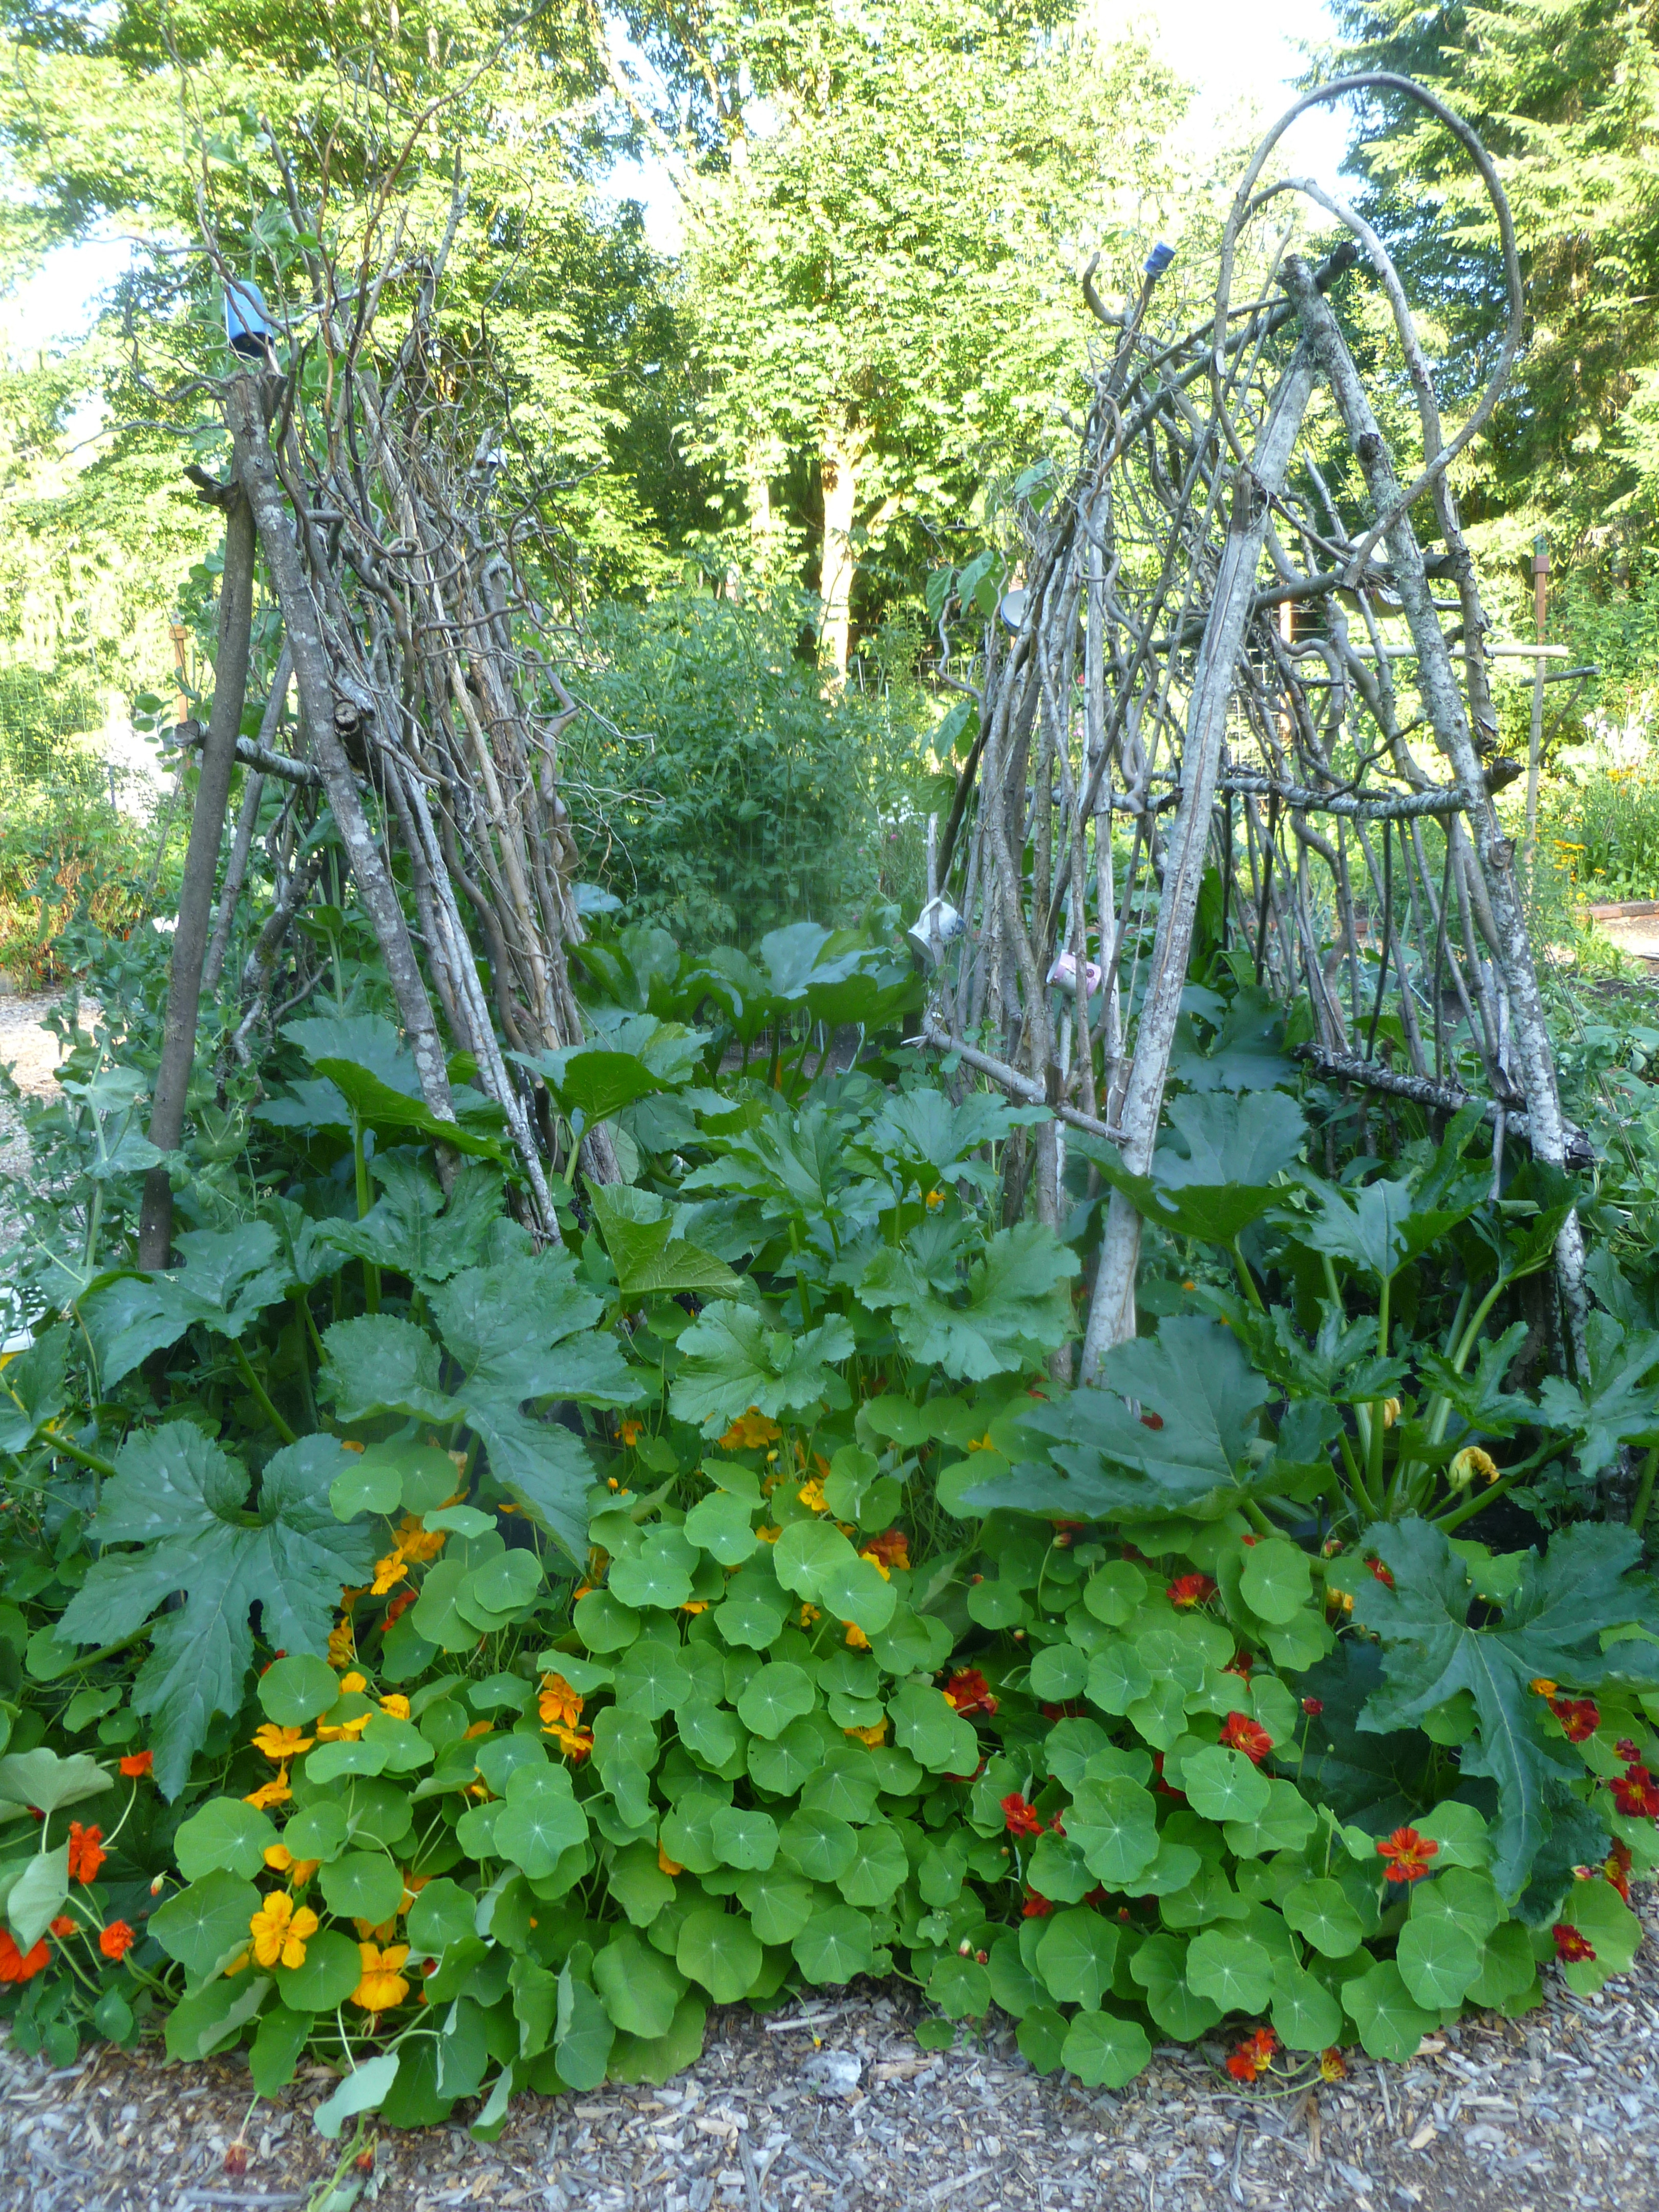 Best ideas about DIY Garden Trellises
. Save or Pin DIY Garden Trellis Ideas Now.